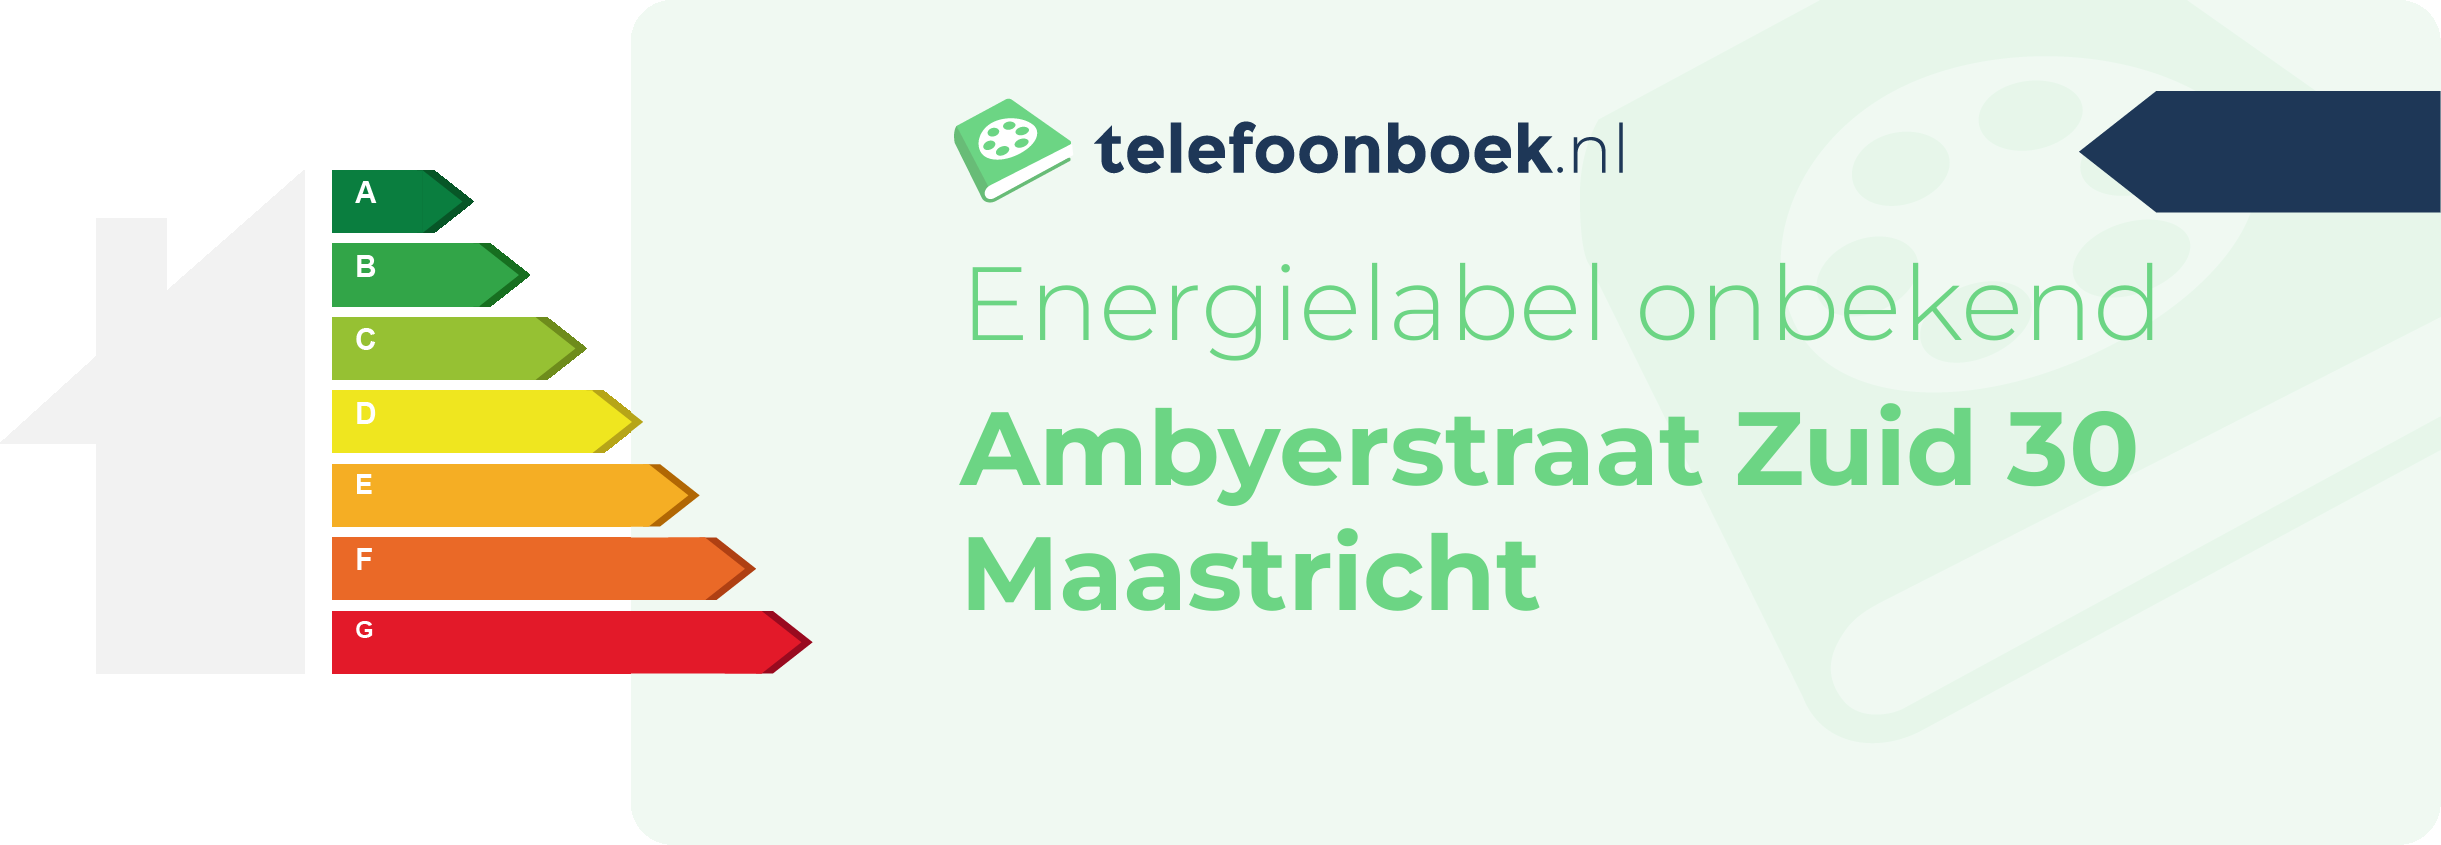 Energielabel Ambyerstraat Zuid 30 Maastricht